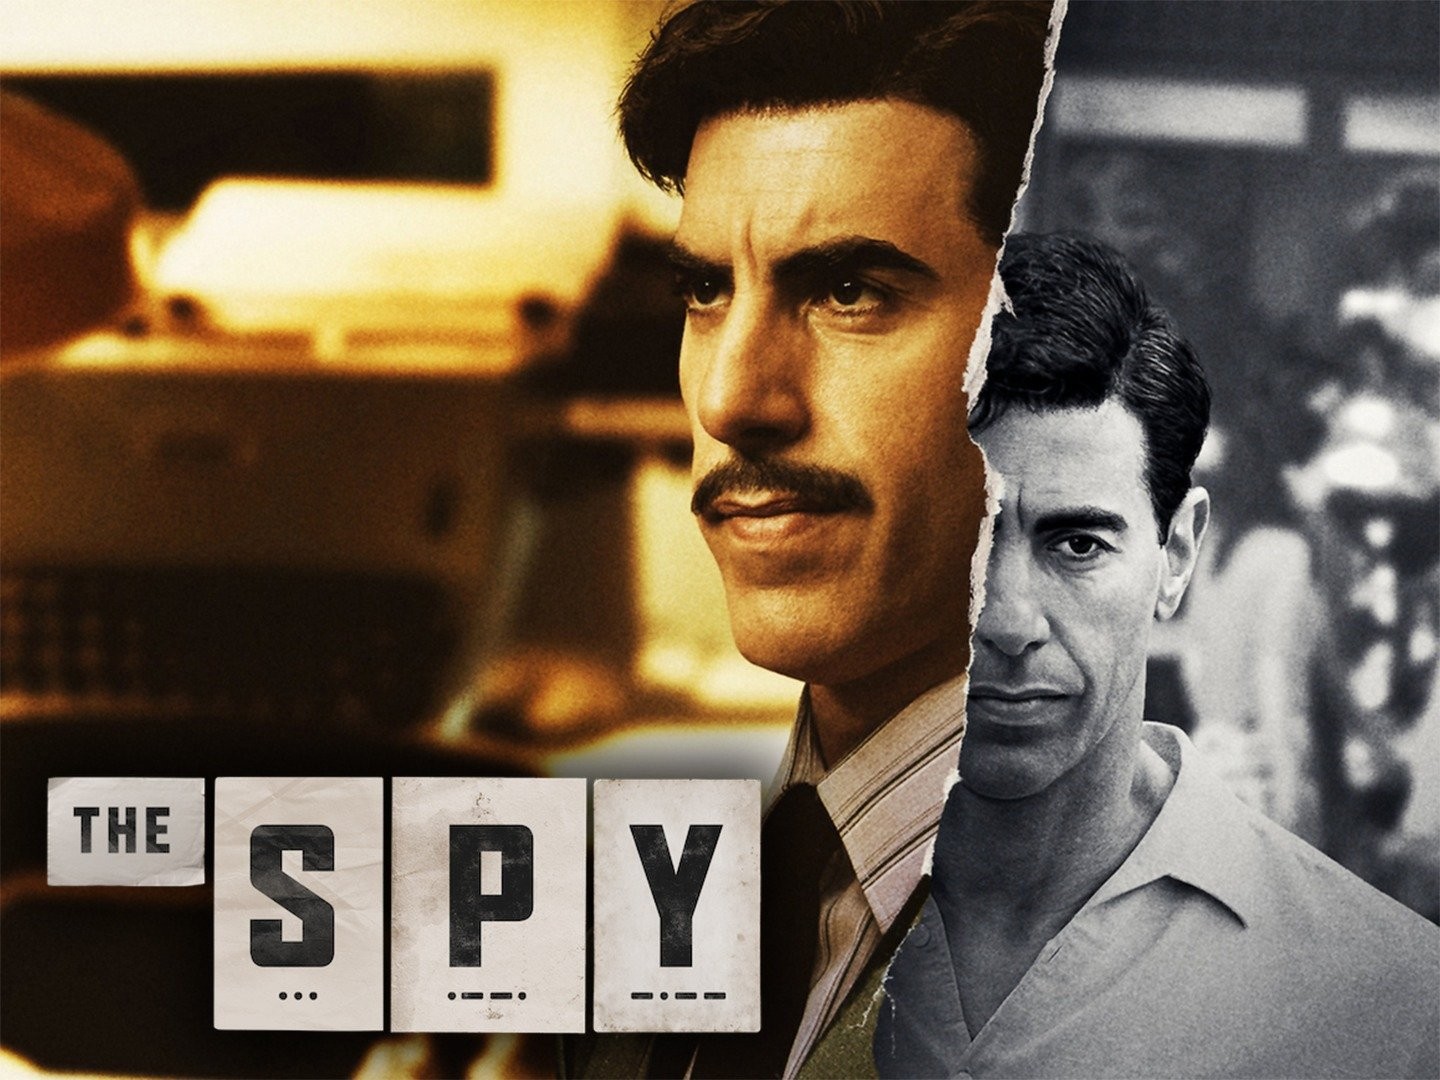 The Spy (TV Mini Series 2019) - IMDb